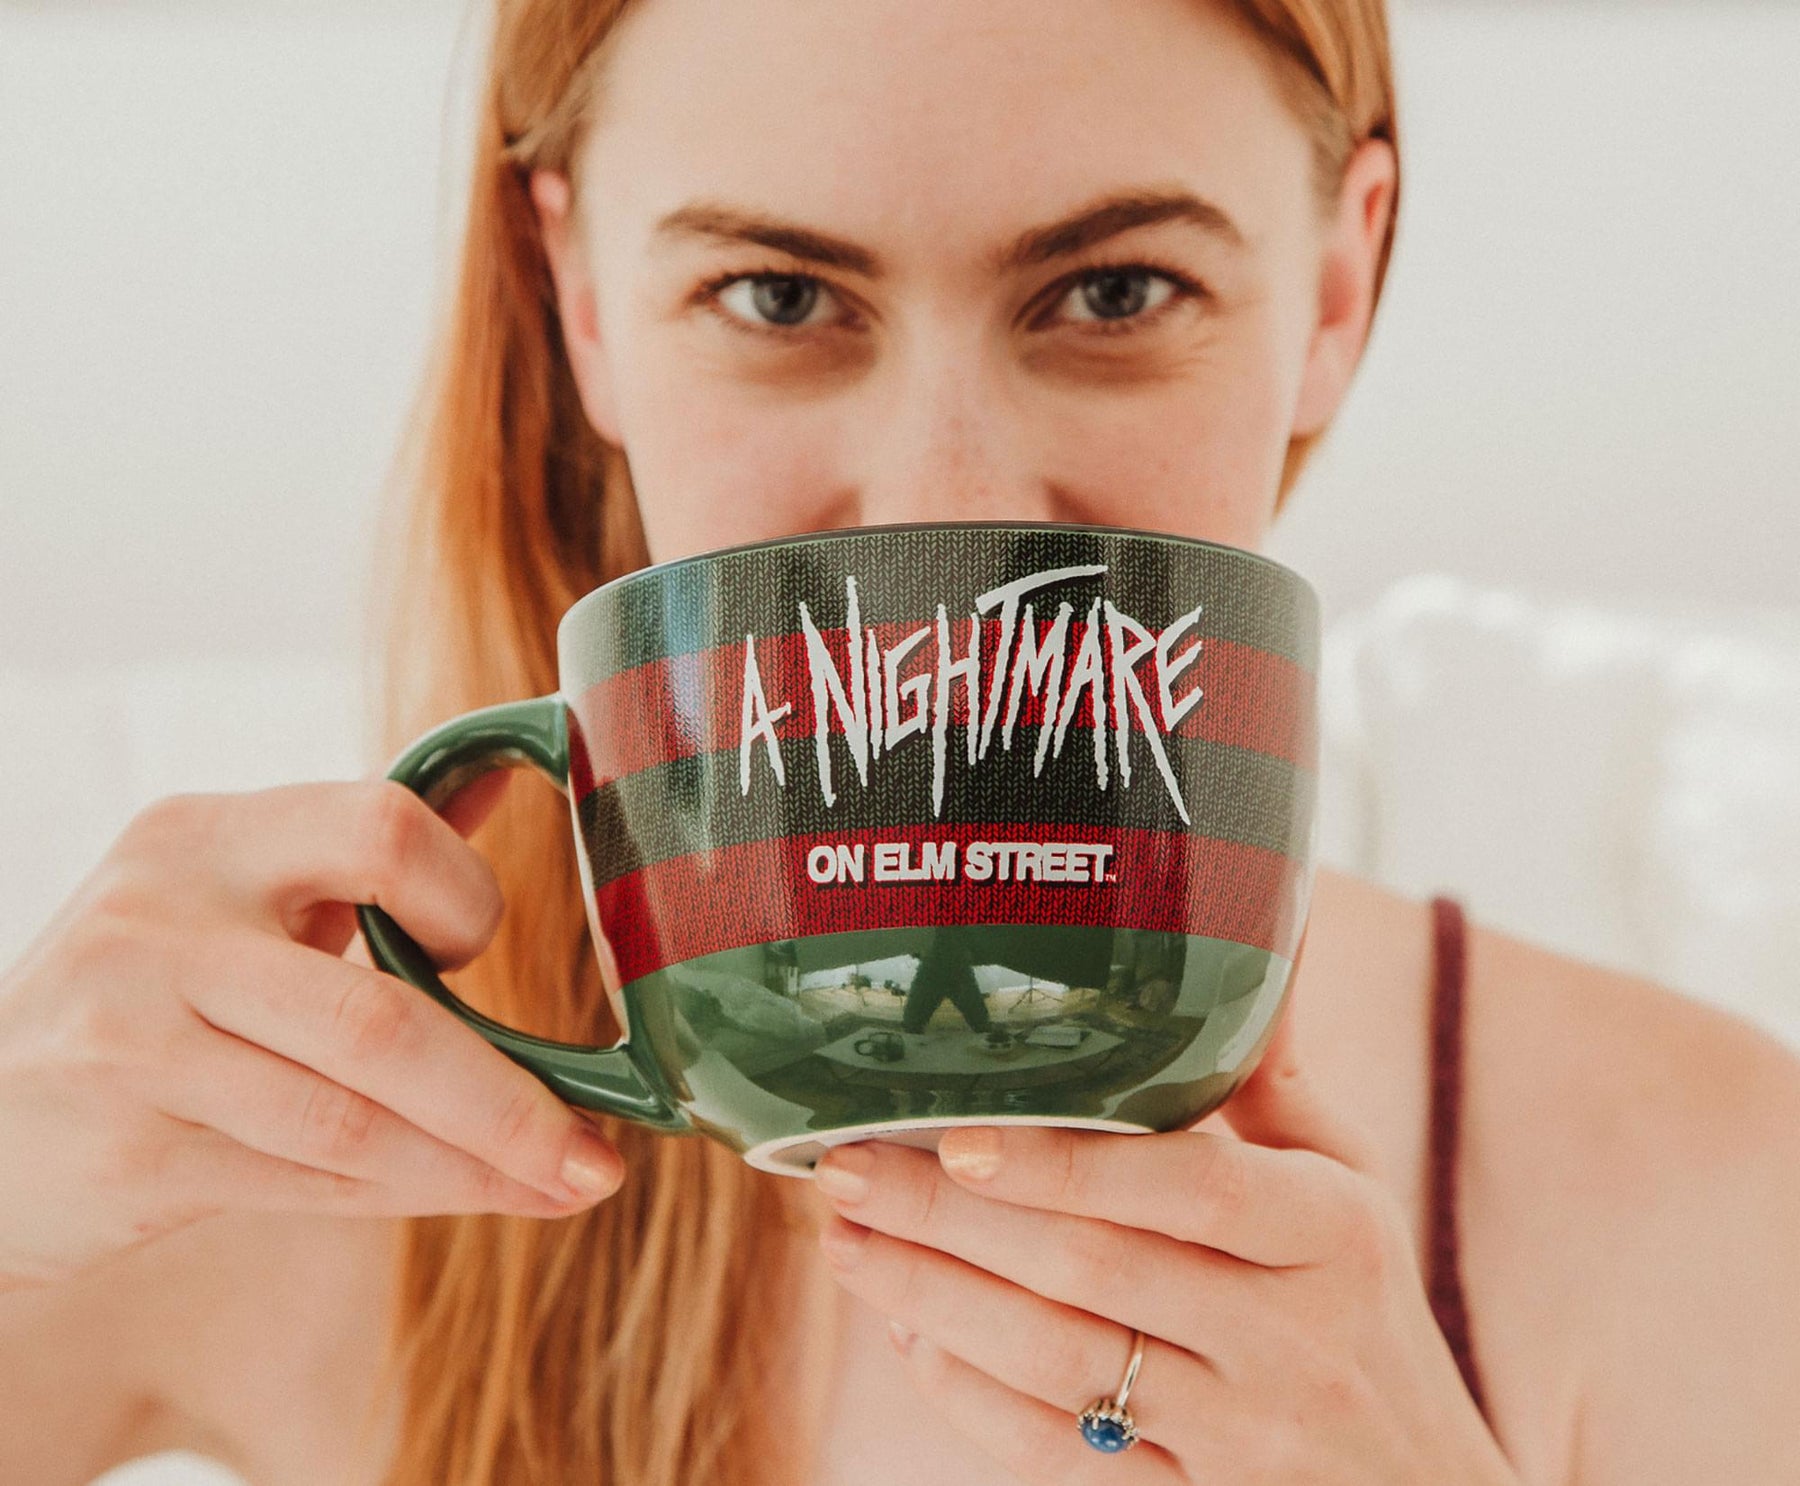 A Nightmare on Elm Street Sweater Claws Ceramic Soup Mug | Holds 24 Ounces